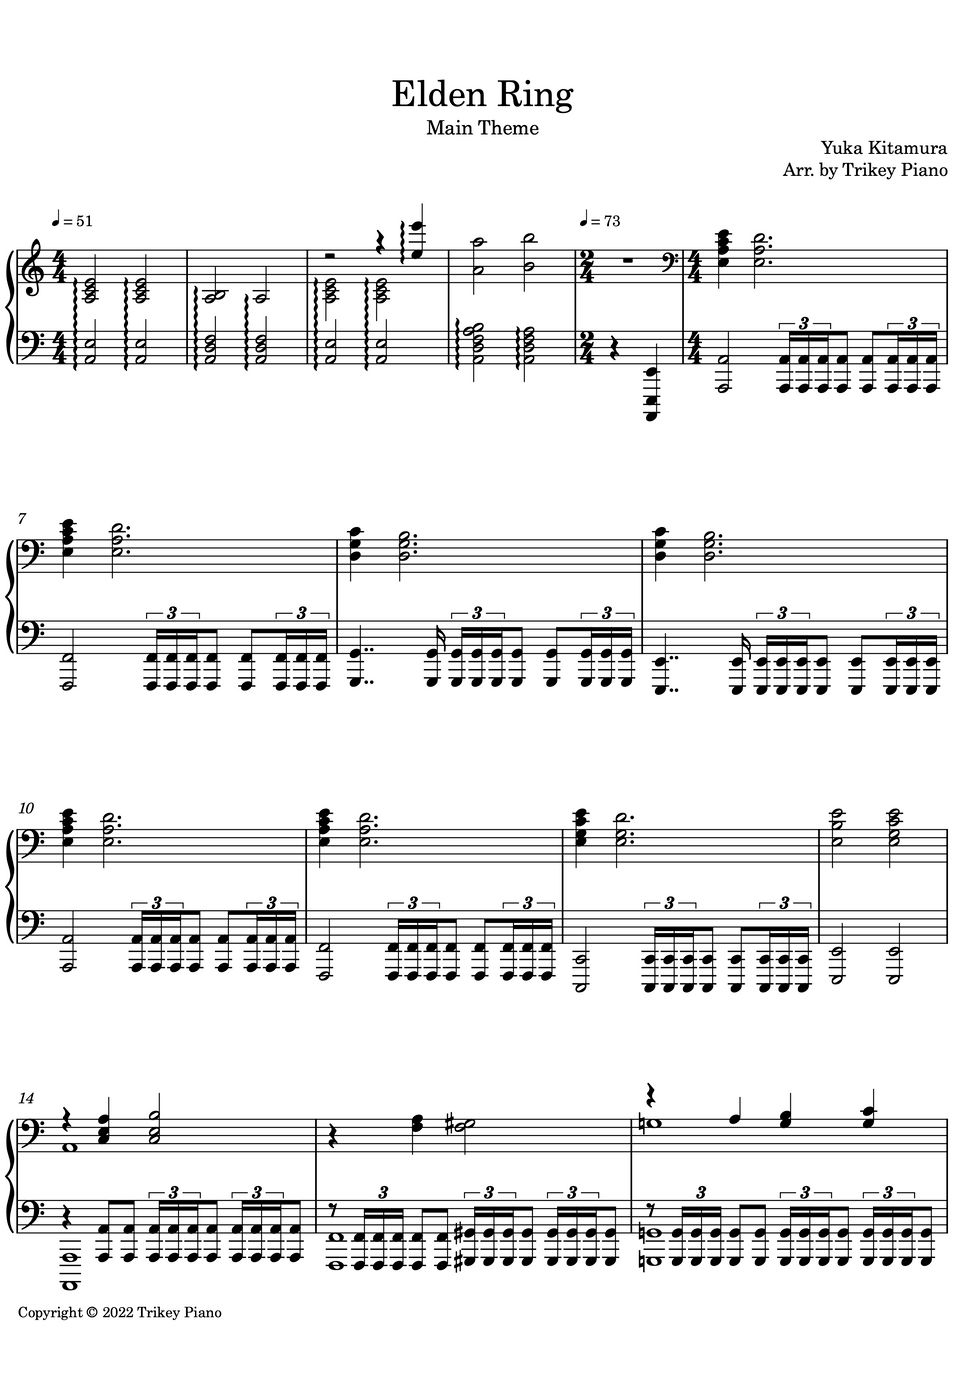 Elden Ring - Main Theme by Trikey Piano